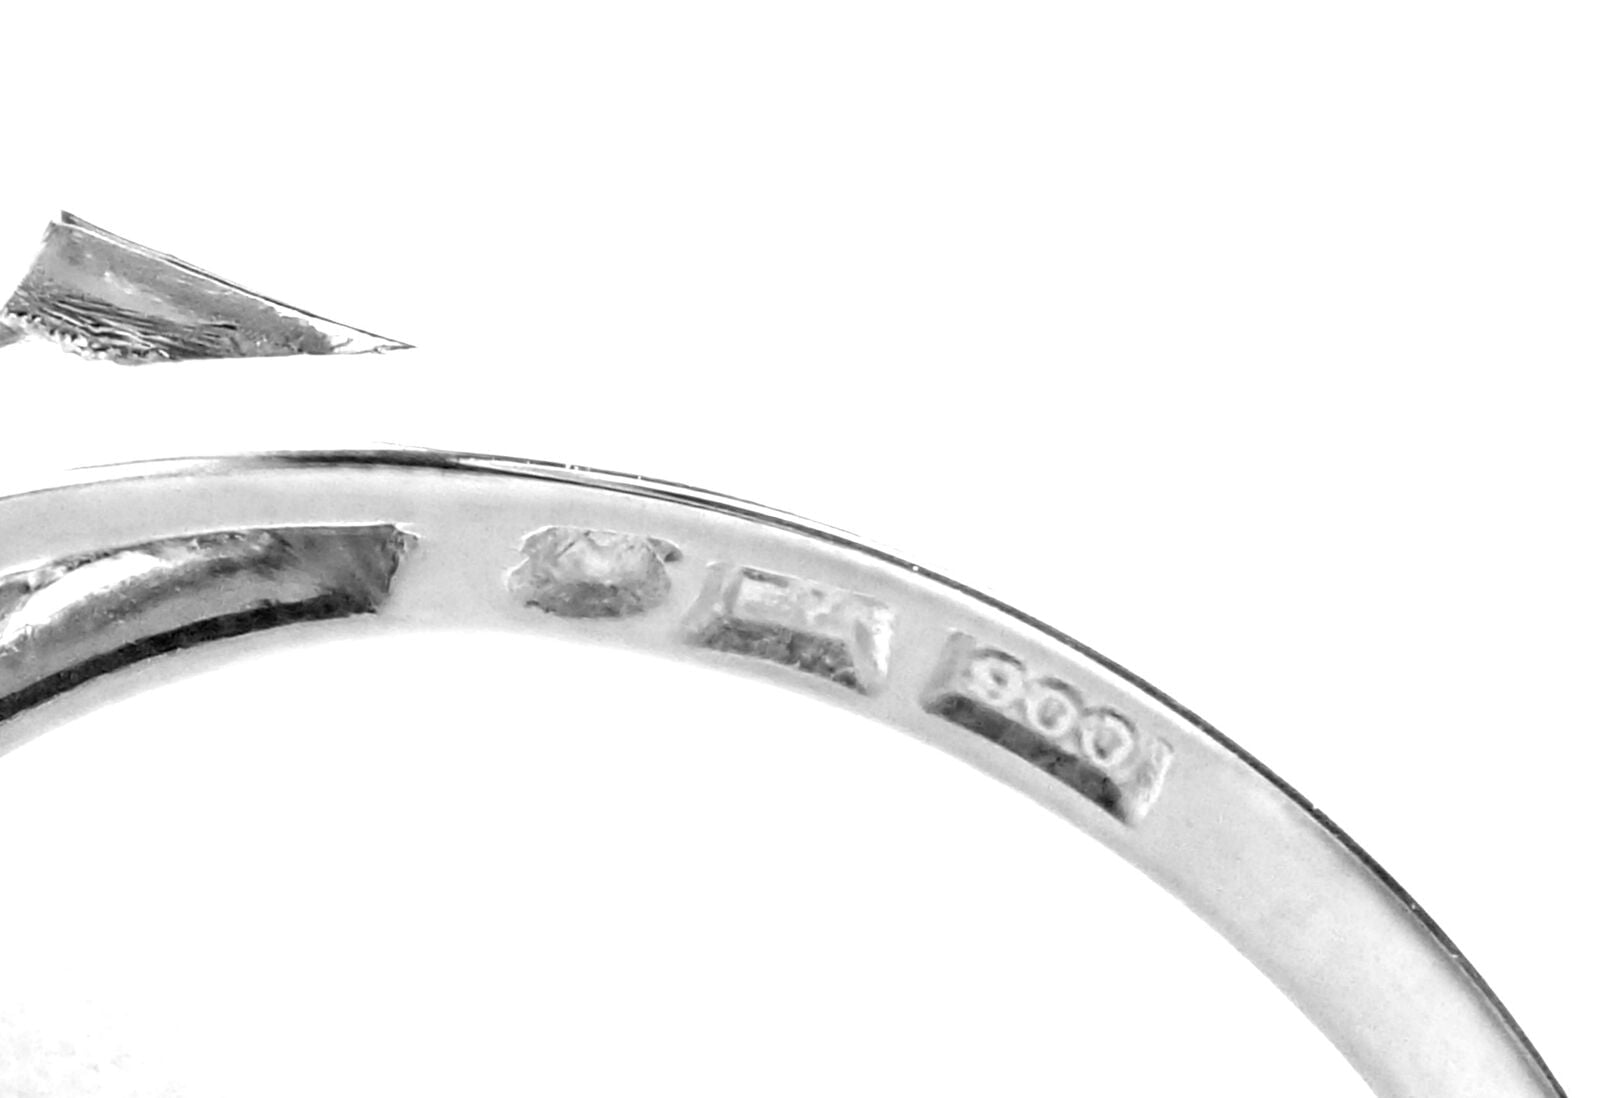 Mikimoto Jewelry & Watches:Fine Jewelry:Rings Rare! Mikimoto Platinum Diamond Large 12mm South Sea Pearl Ring